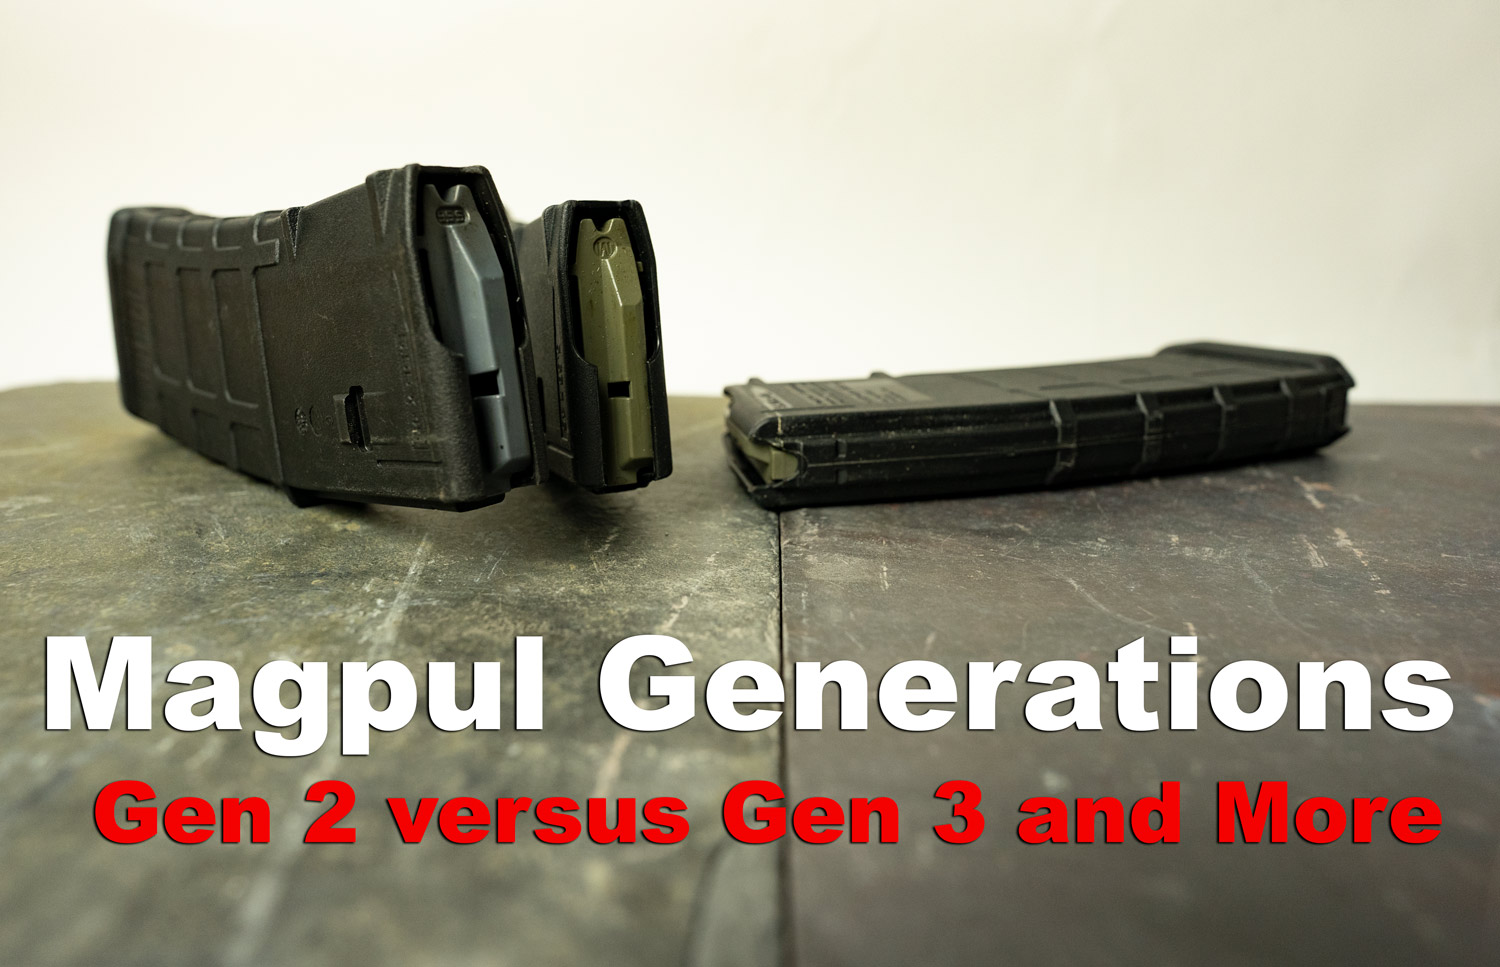 Magpul generations compared